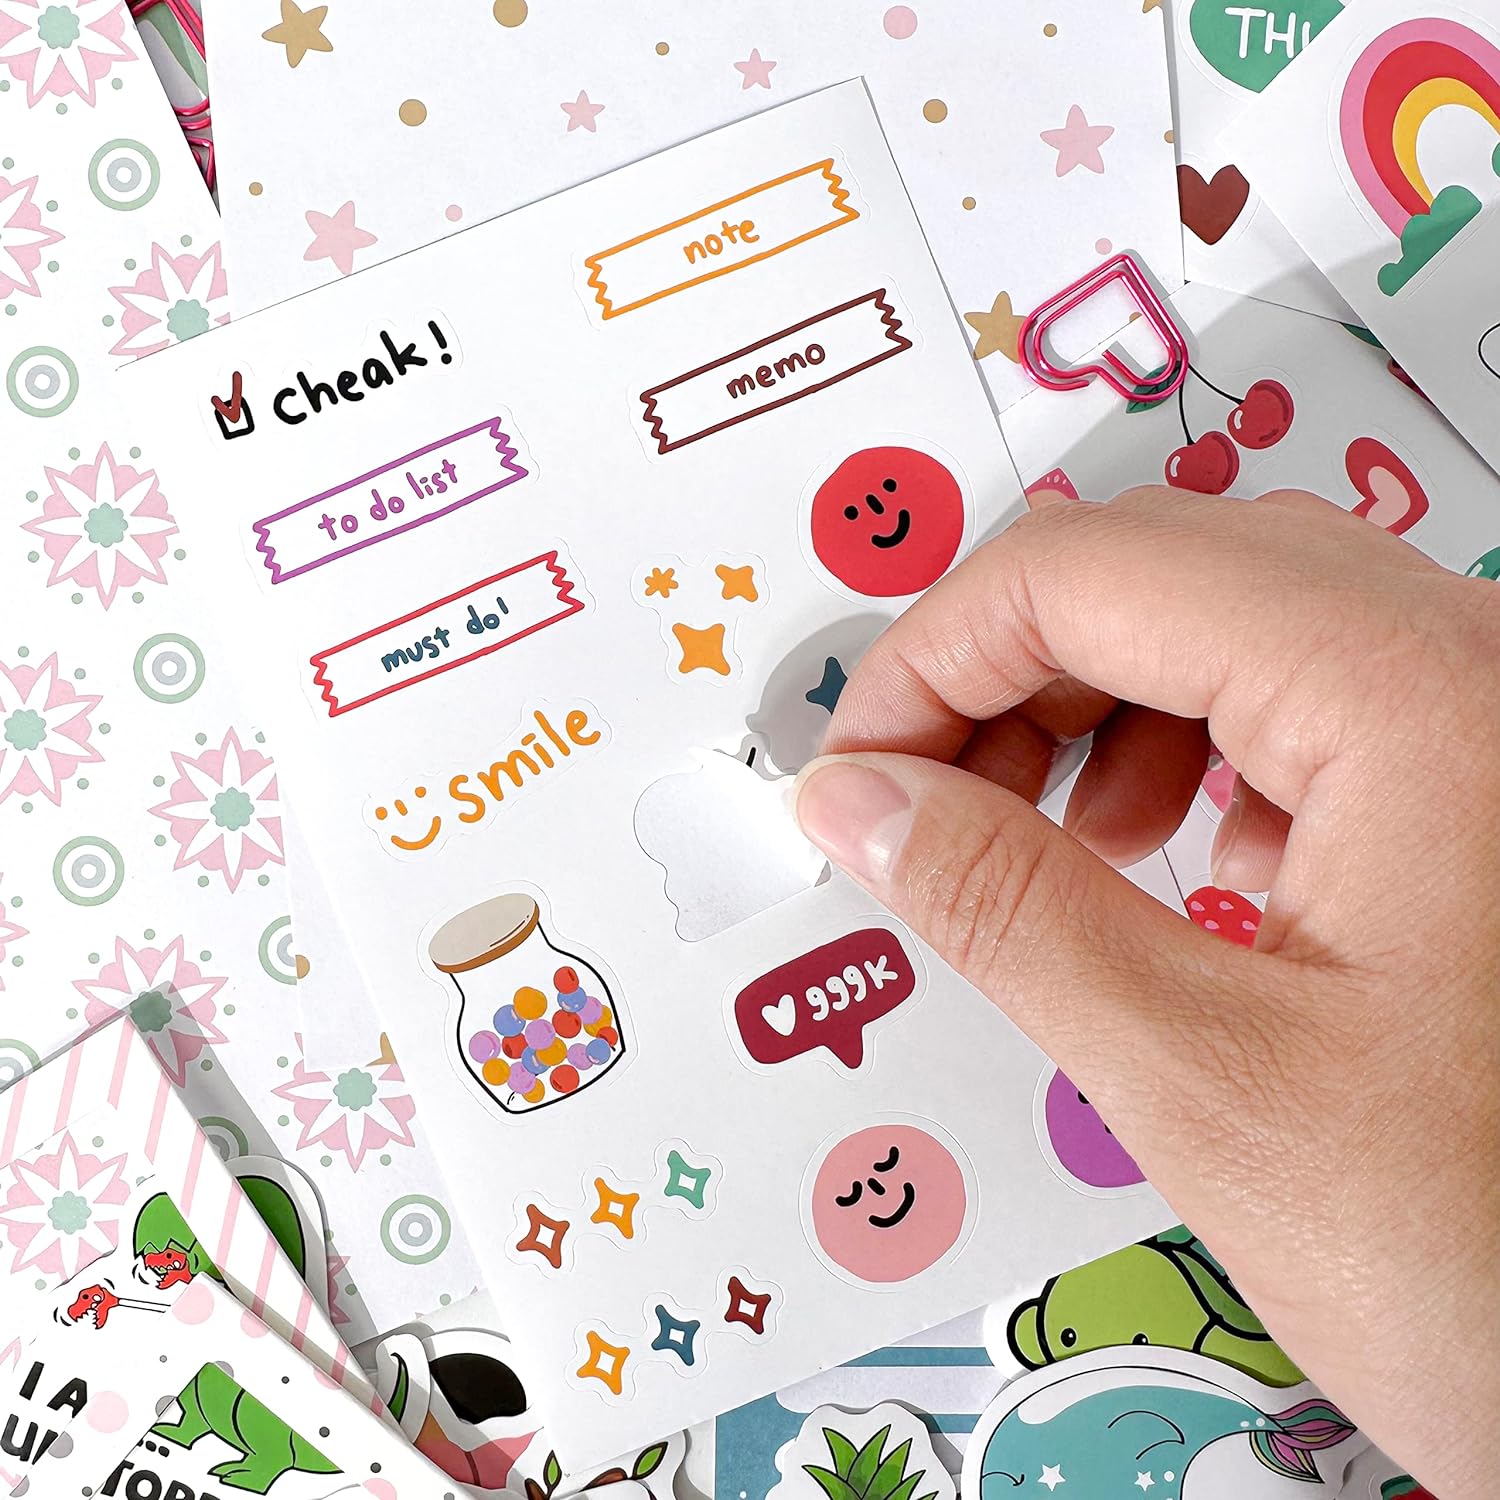 DIY Journal Kit for Girls 8-12 Pink Scrapbook Diary Supplies Set